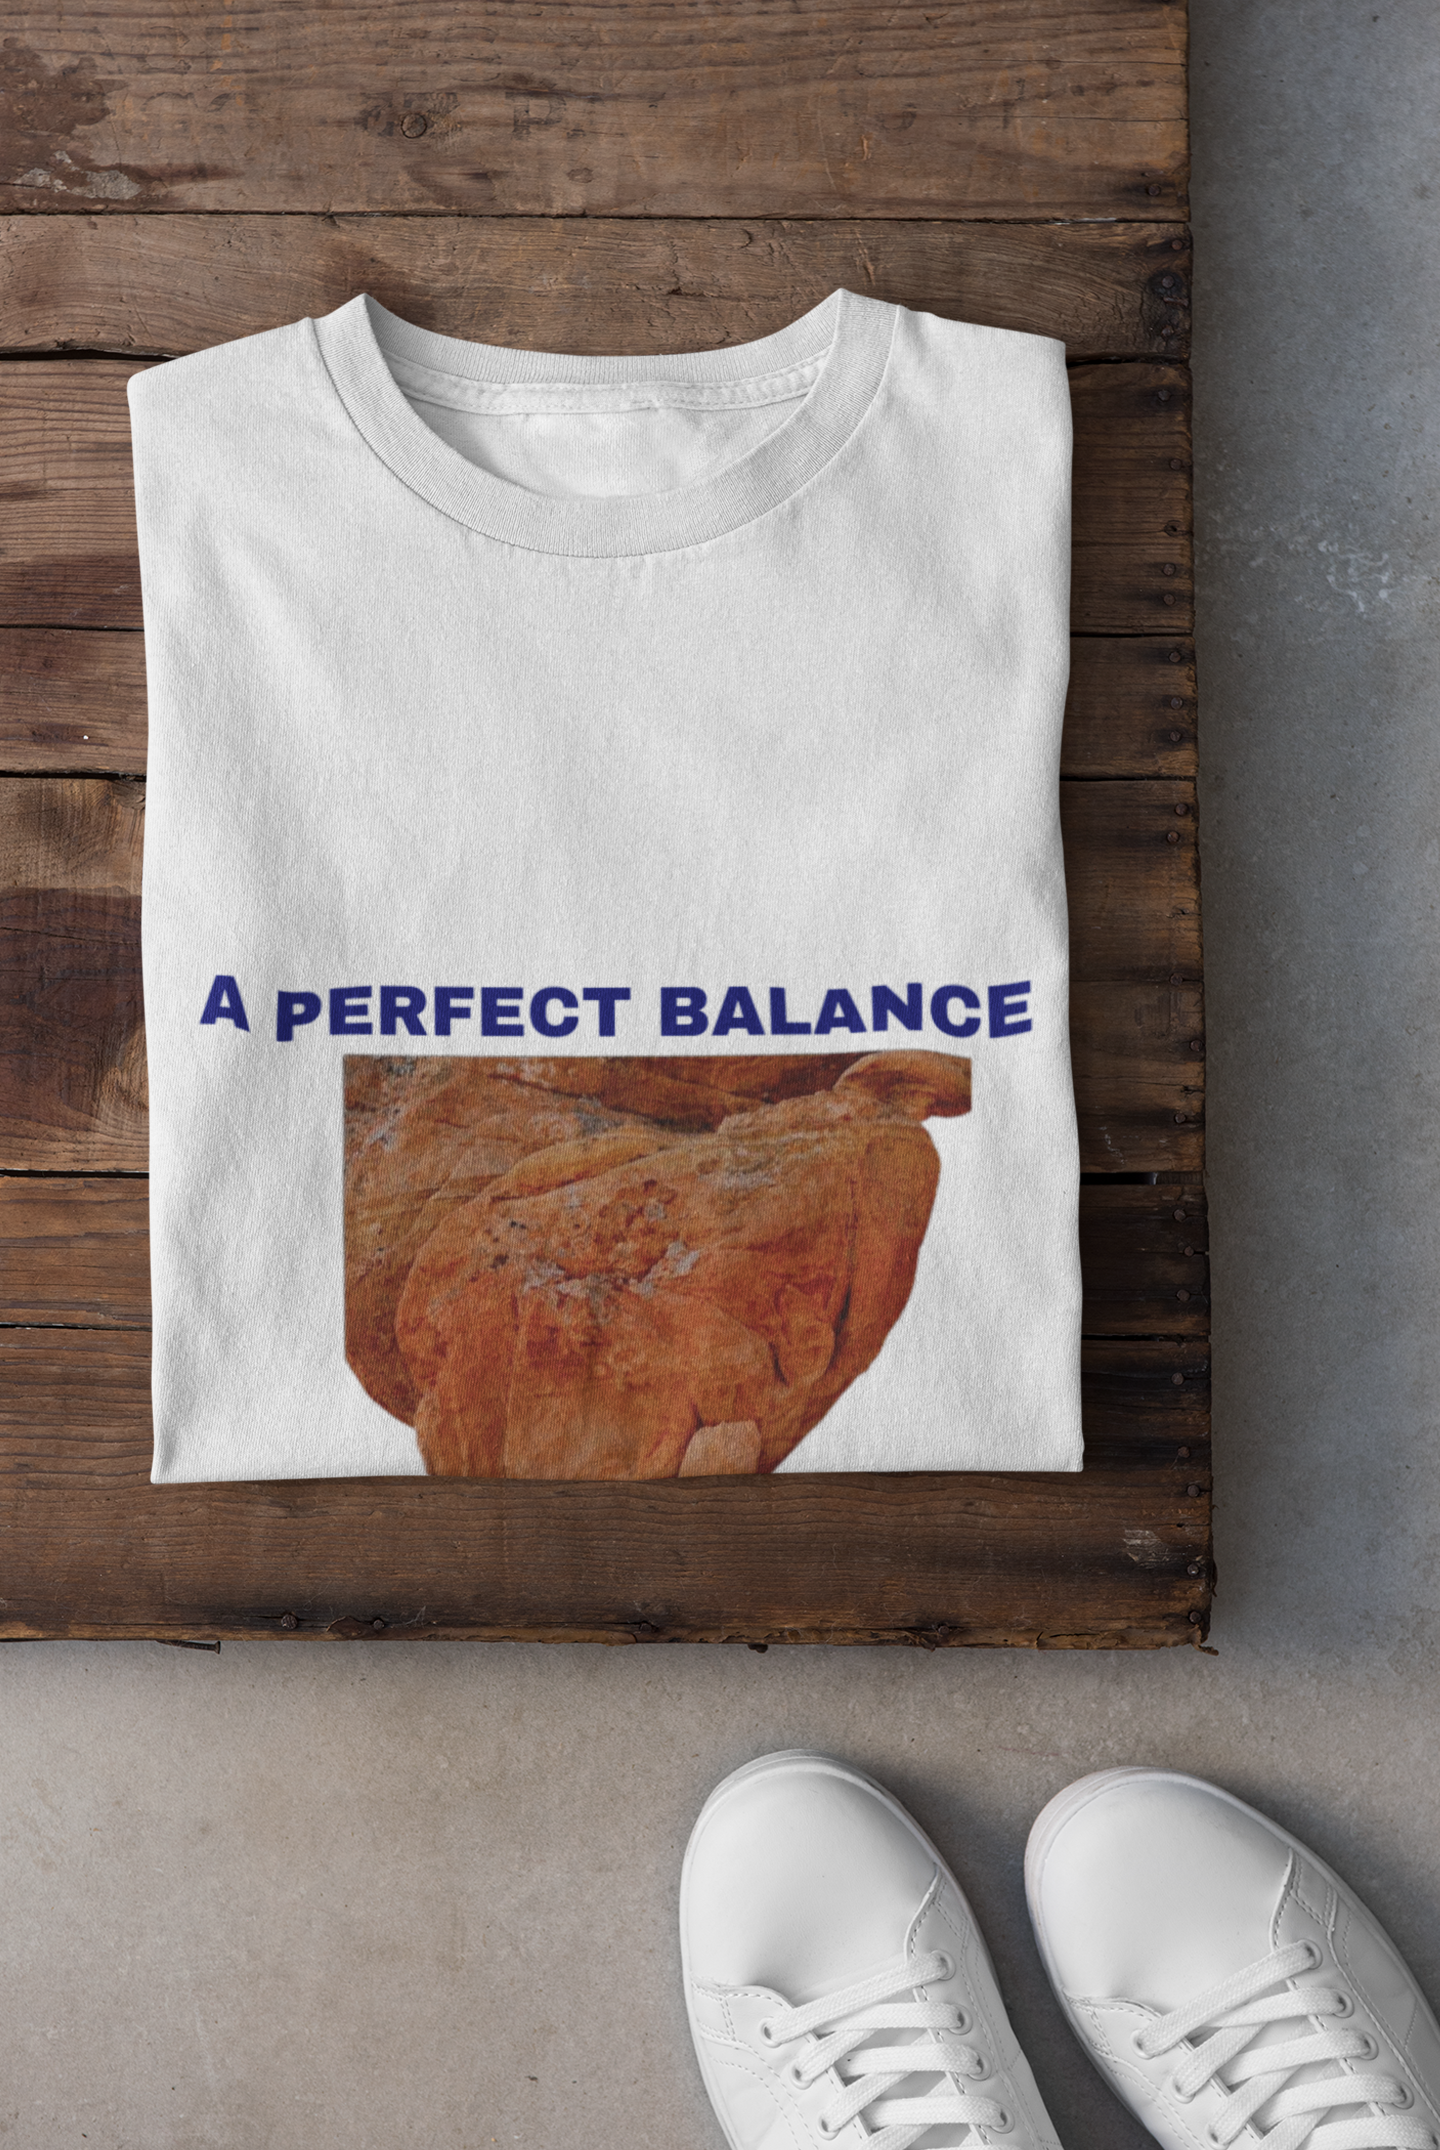 A PERFECT BALANCE T SHIRT